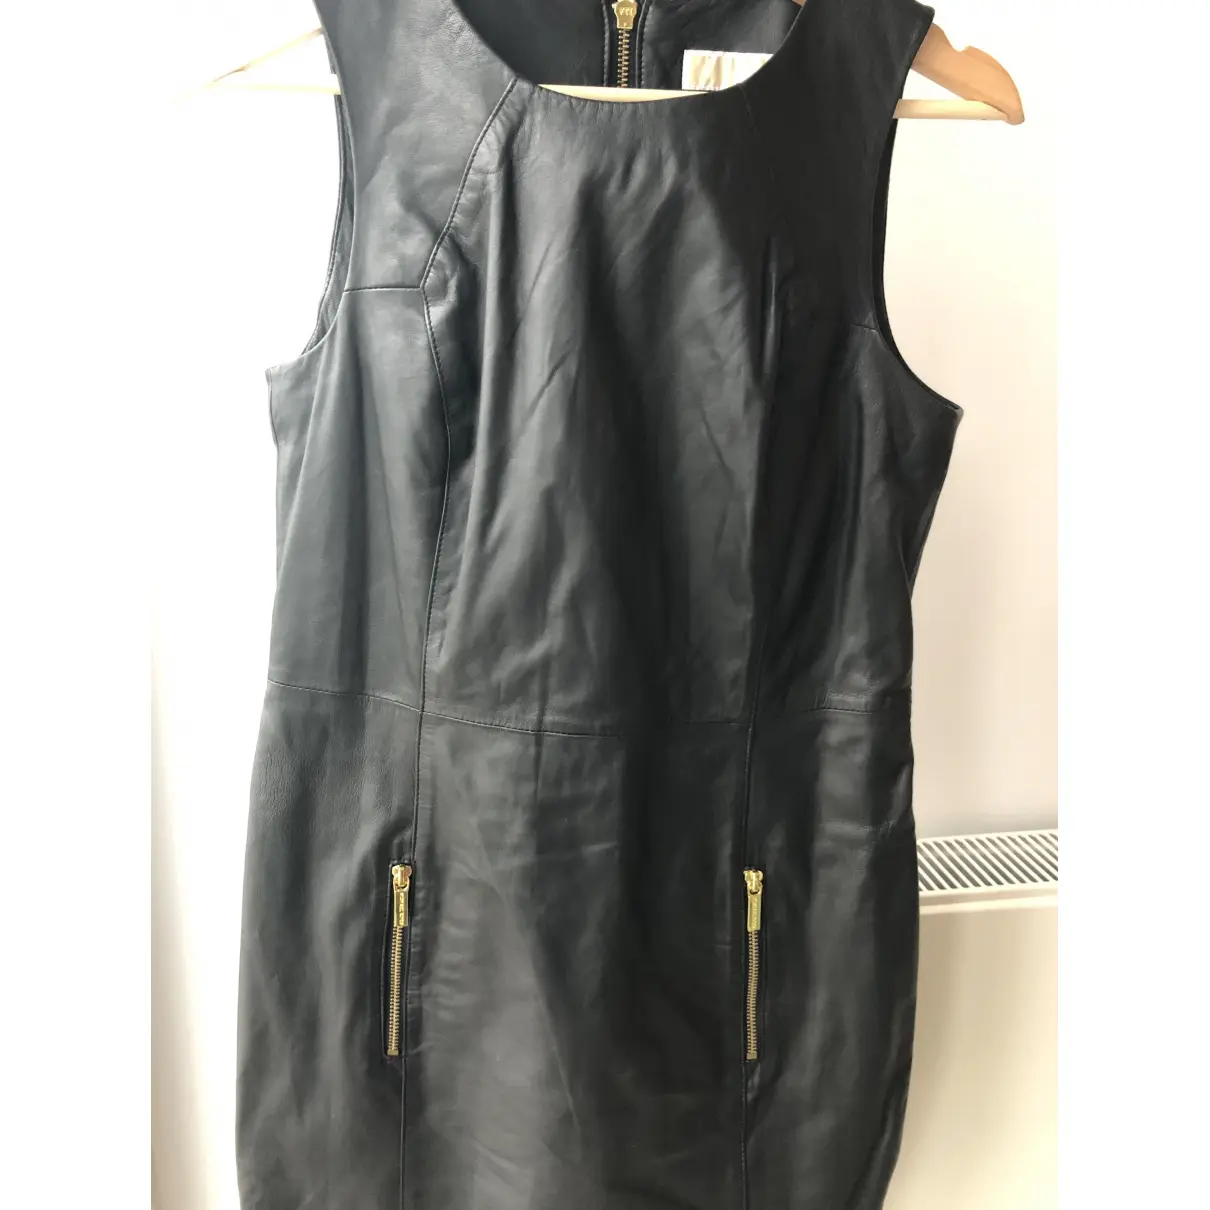 Leather dress Michael Kors